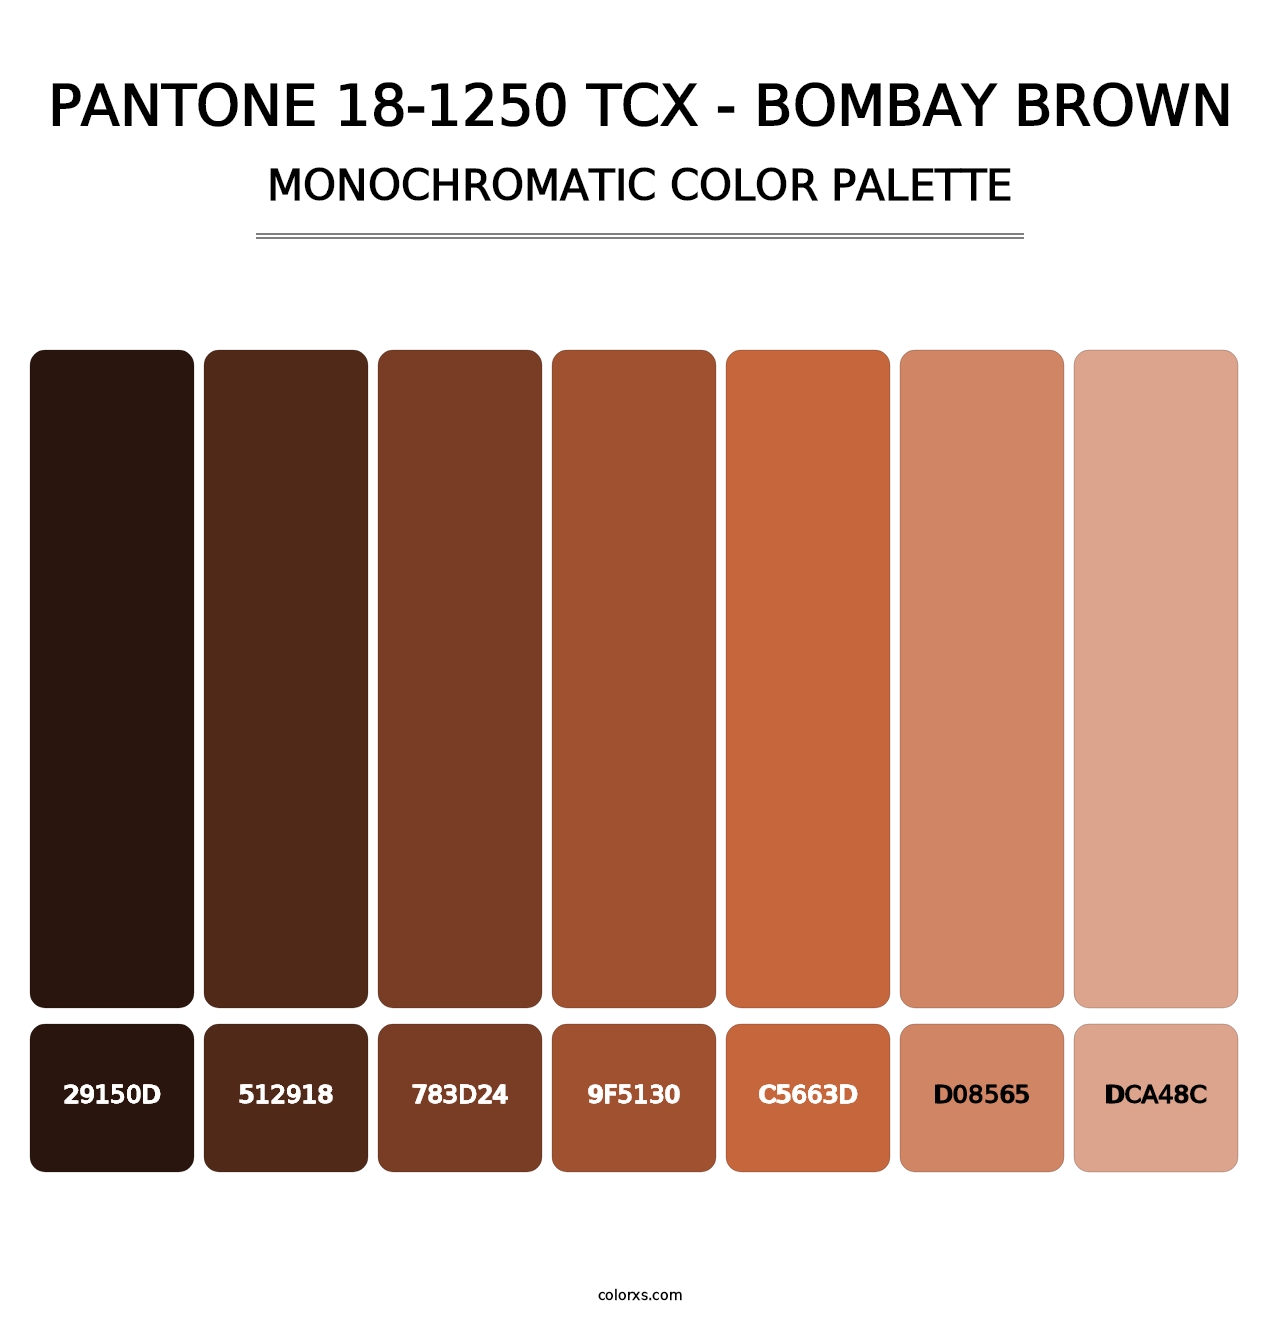 PANTONE 18-1250 TCX - Bombay Brown - Monochromatic Color Palette